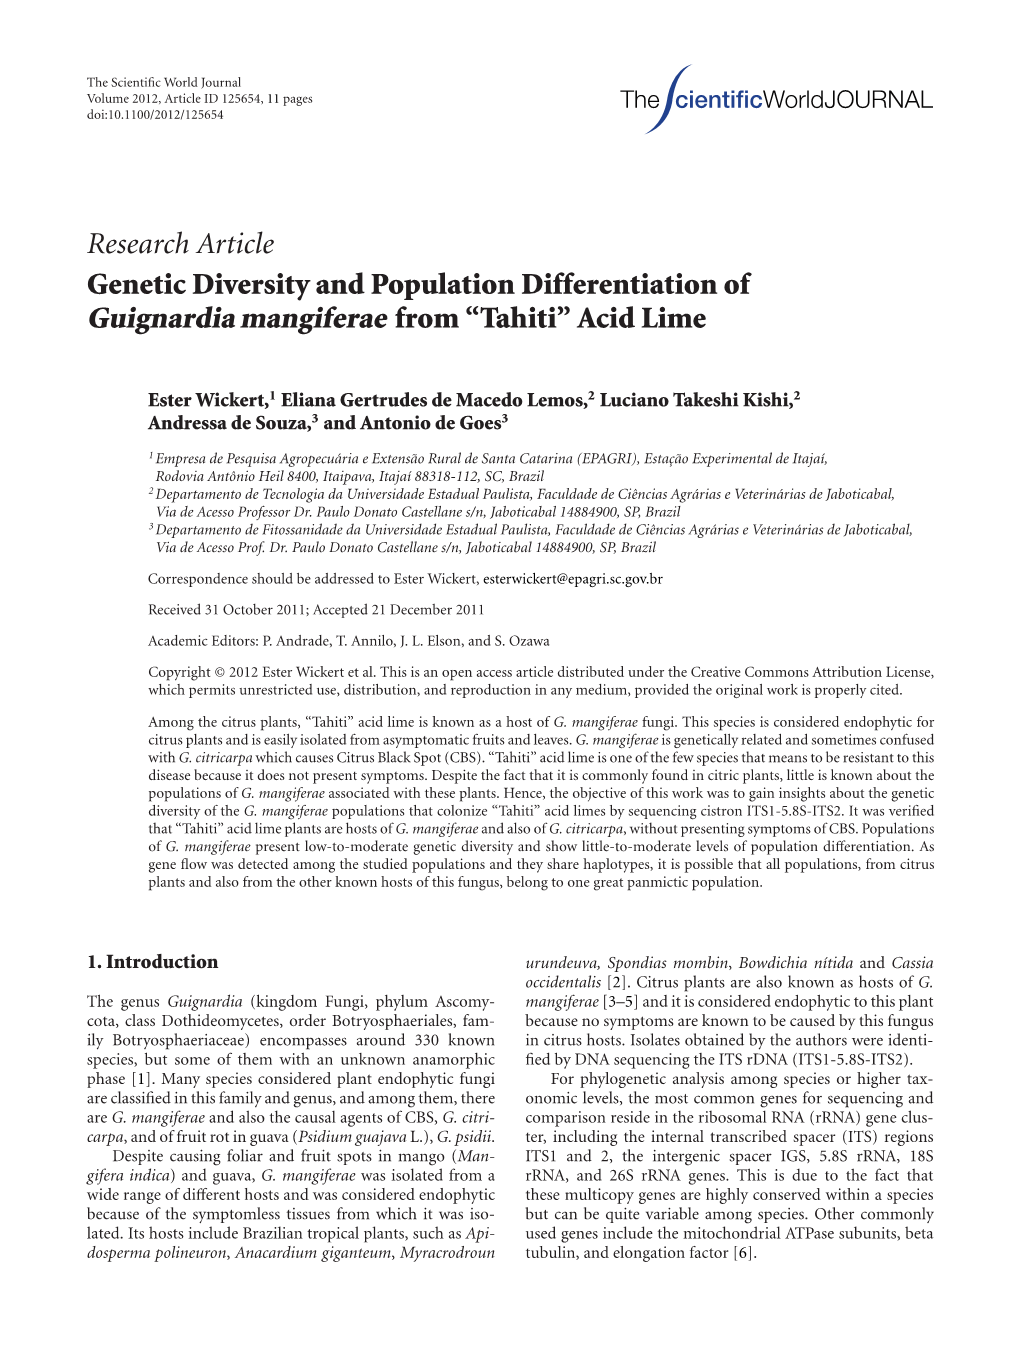 Genetic Diversity and Population Differentiation of Guignardia Mangiferae from “Tahiti” Acid Lime